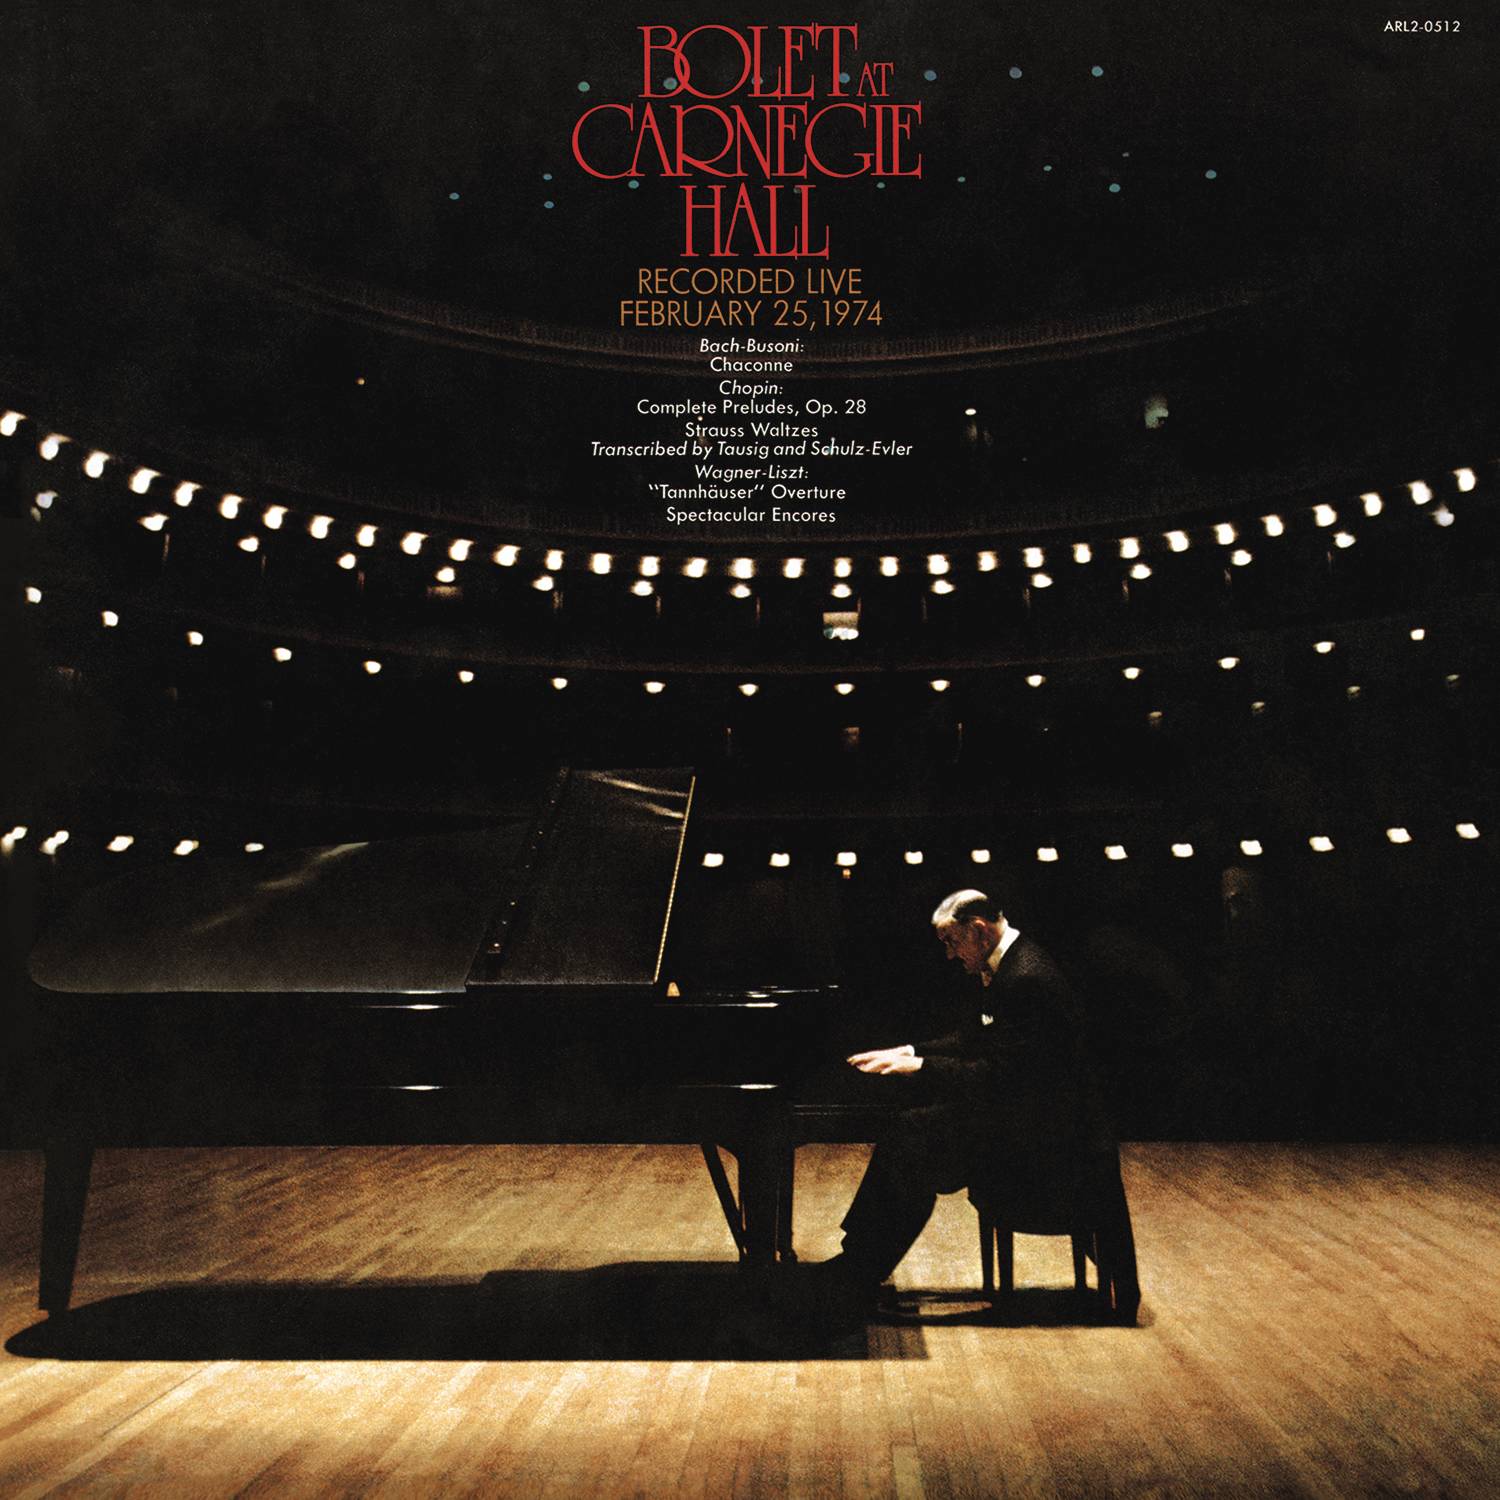 Jorge Bolet at Carnegie Hall, New York City, February 25, 1974 (Remastered)